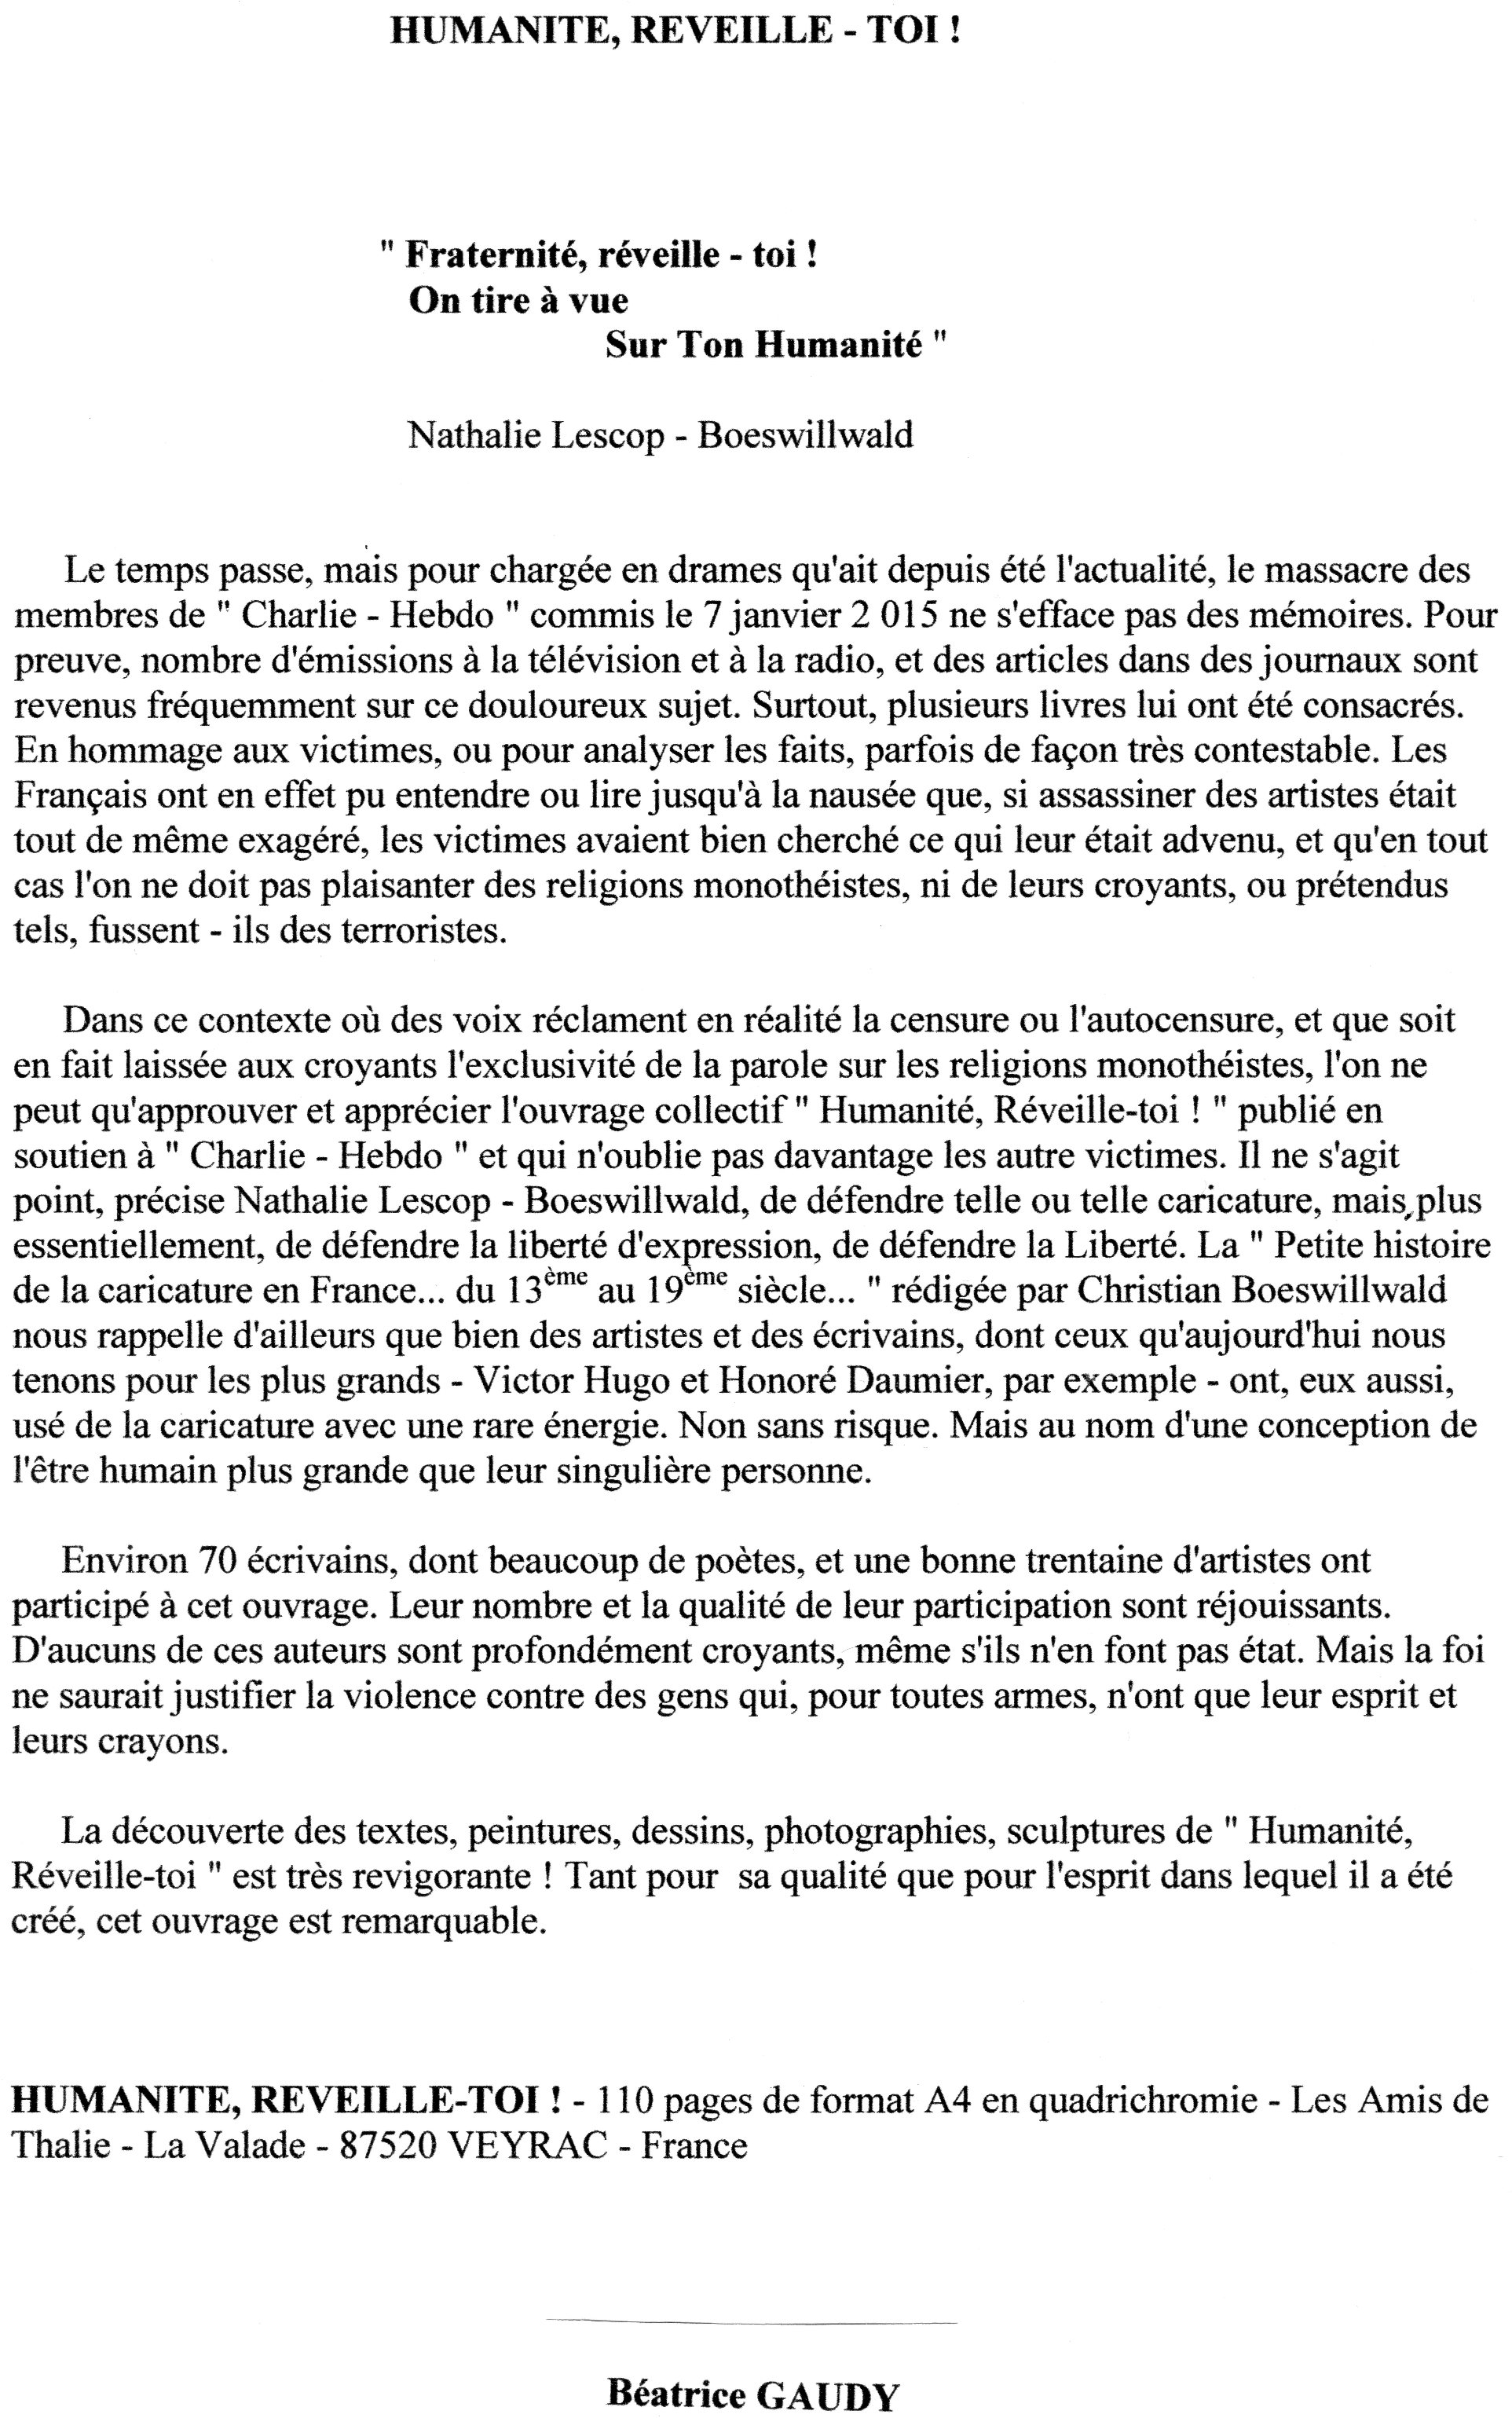 Béatrice Gaudy - Chronique 3 - 12 7 15